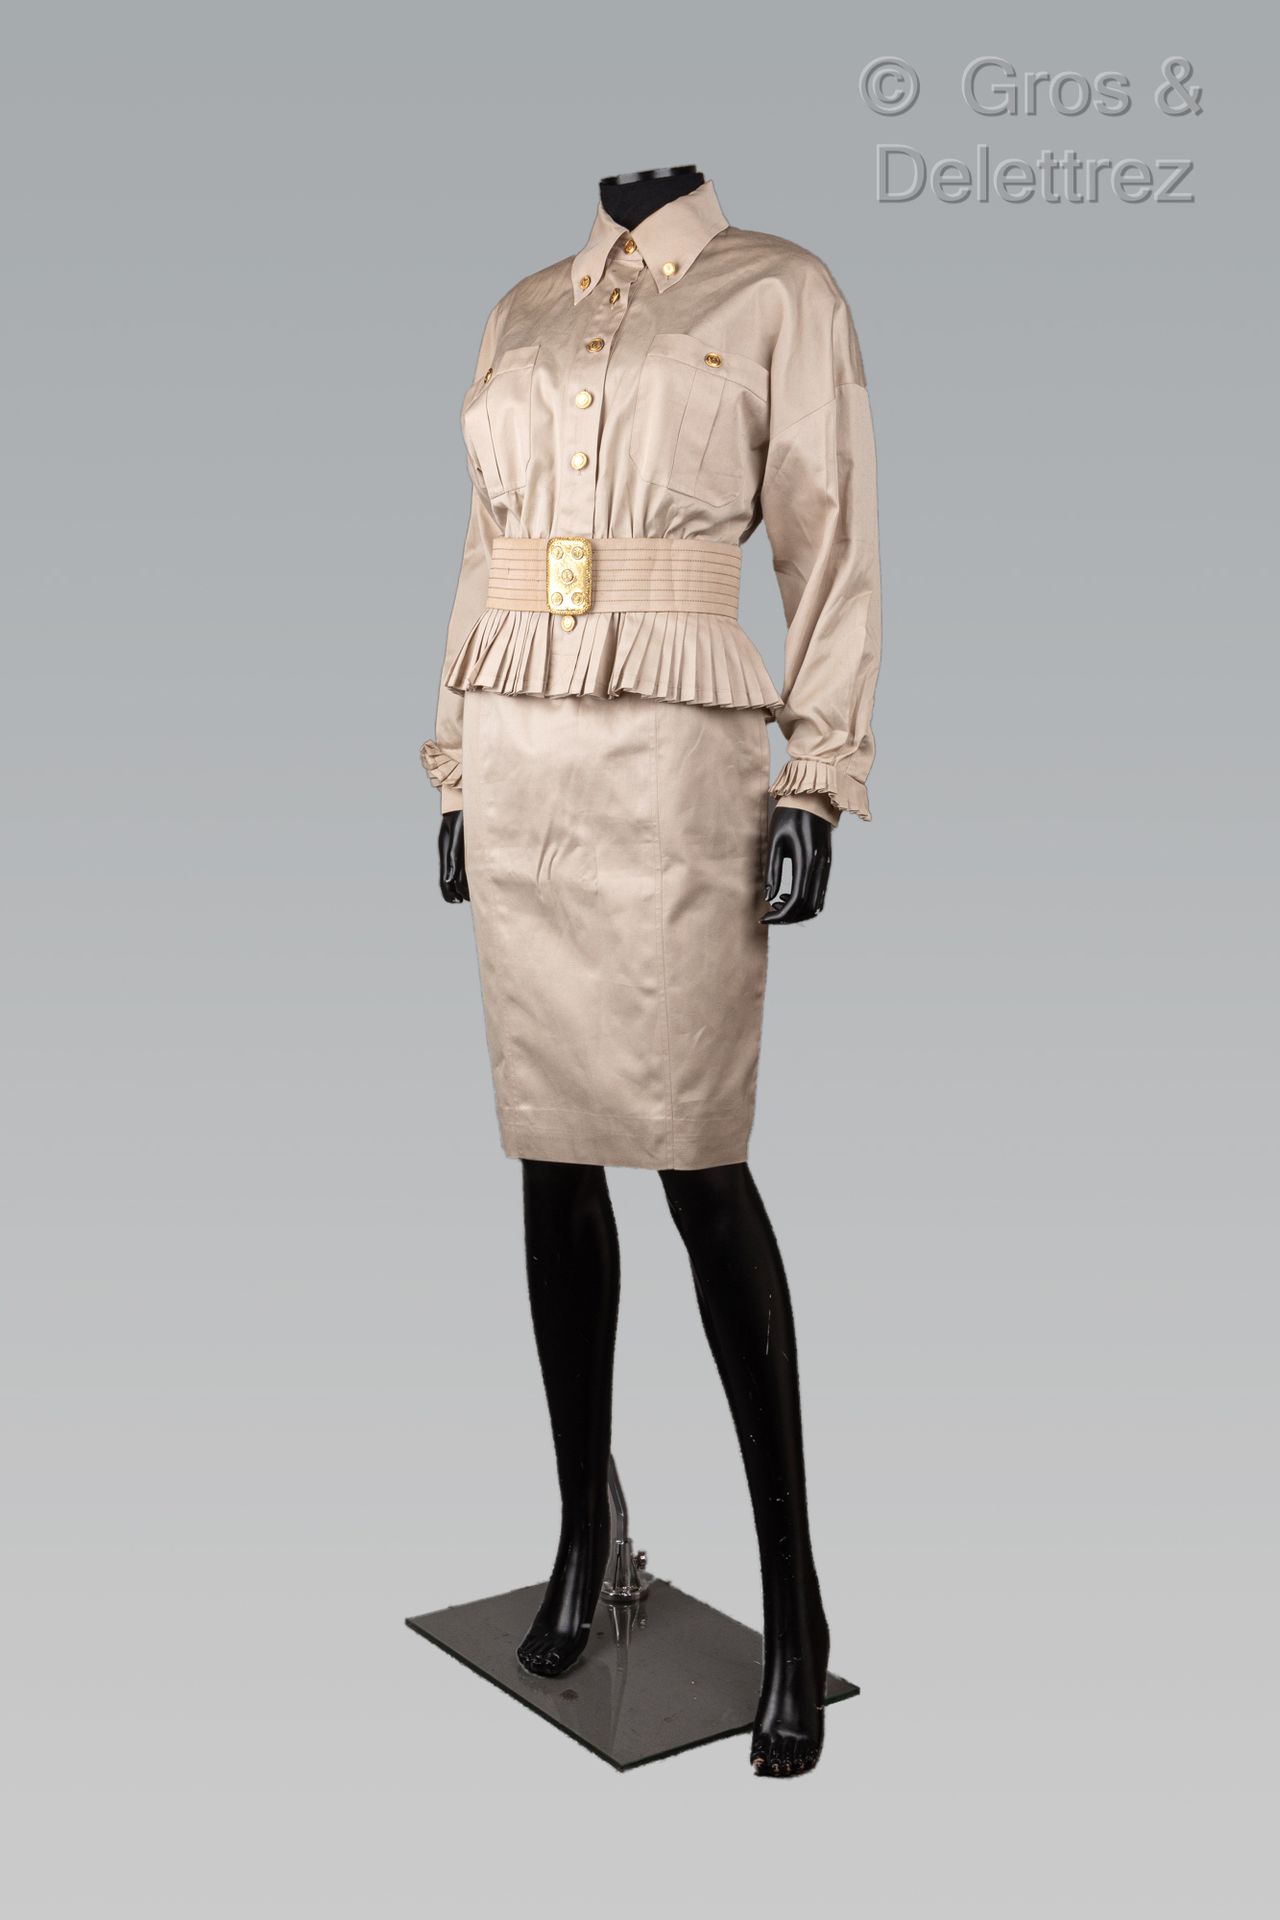 Null 卡尔-拉格斐的香奈儿专卖店

1986-1987年秋/冬系列

沙色棉质服装，包括一件外套，小领子，单胸，上面有小姐的肖像，衣服底部从腰部开始打褶，长&hellip;